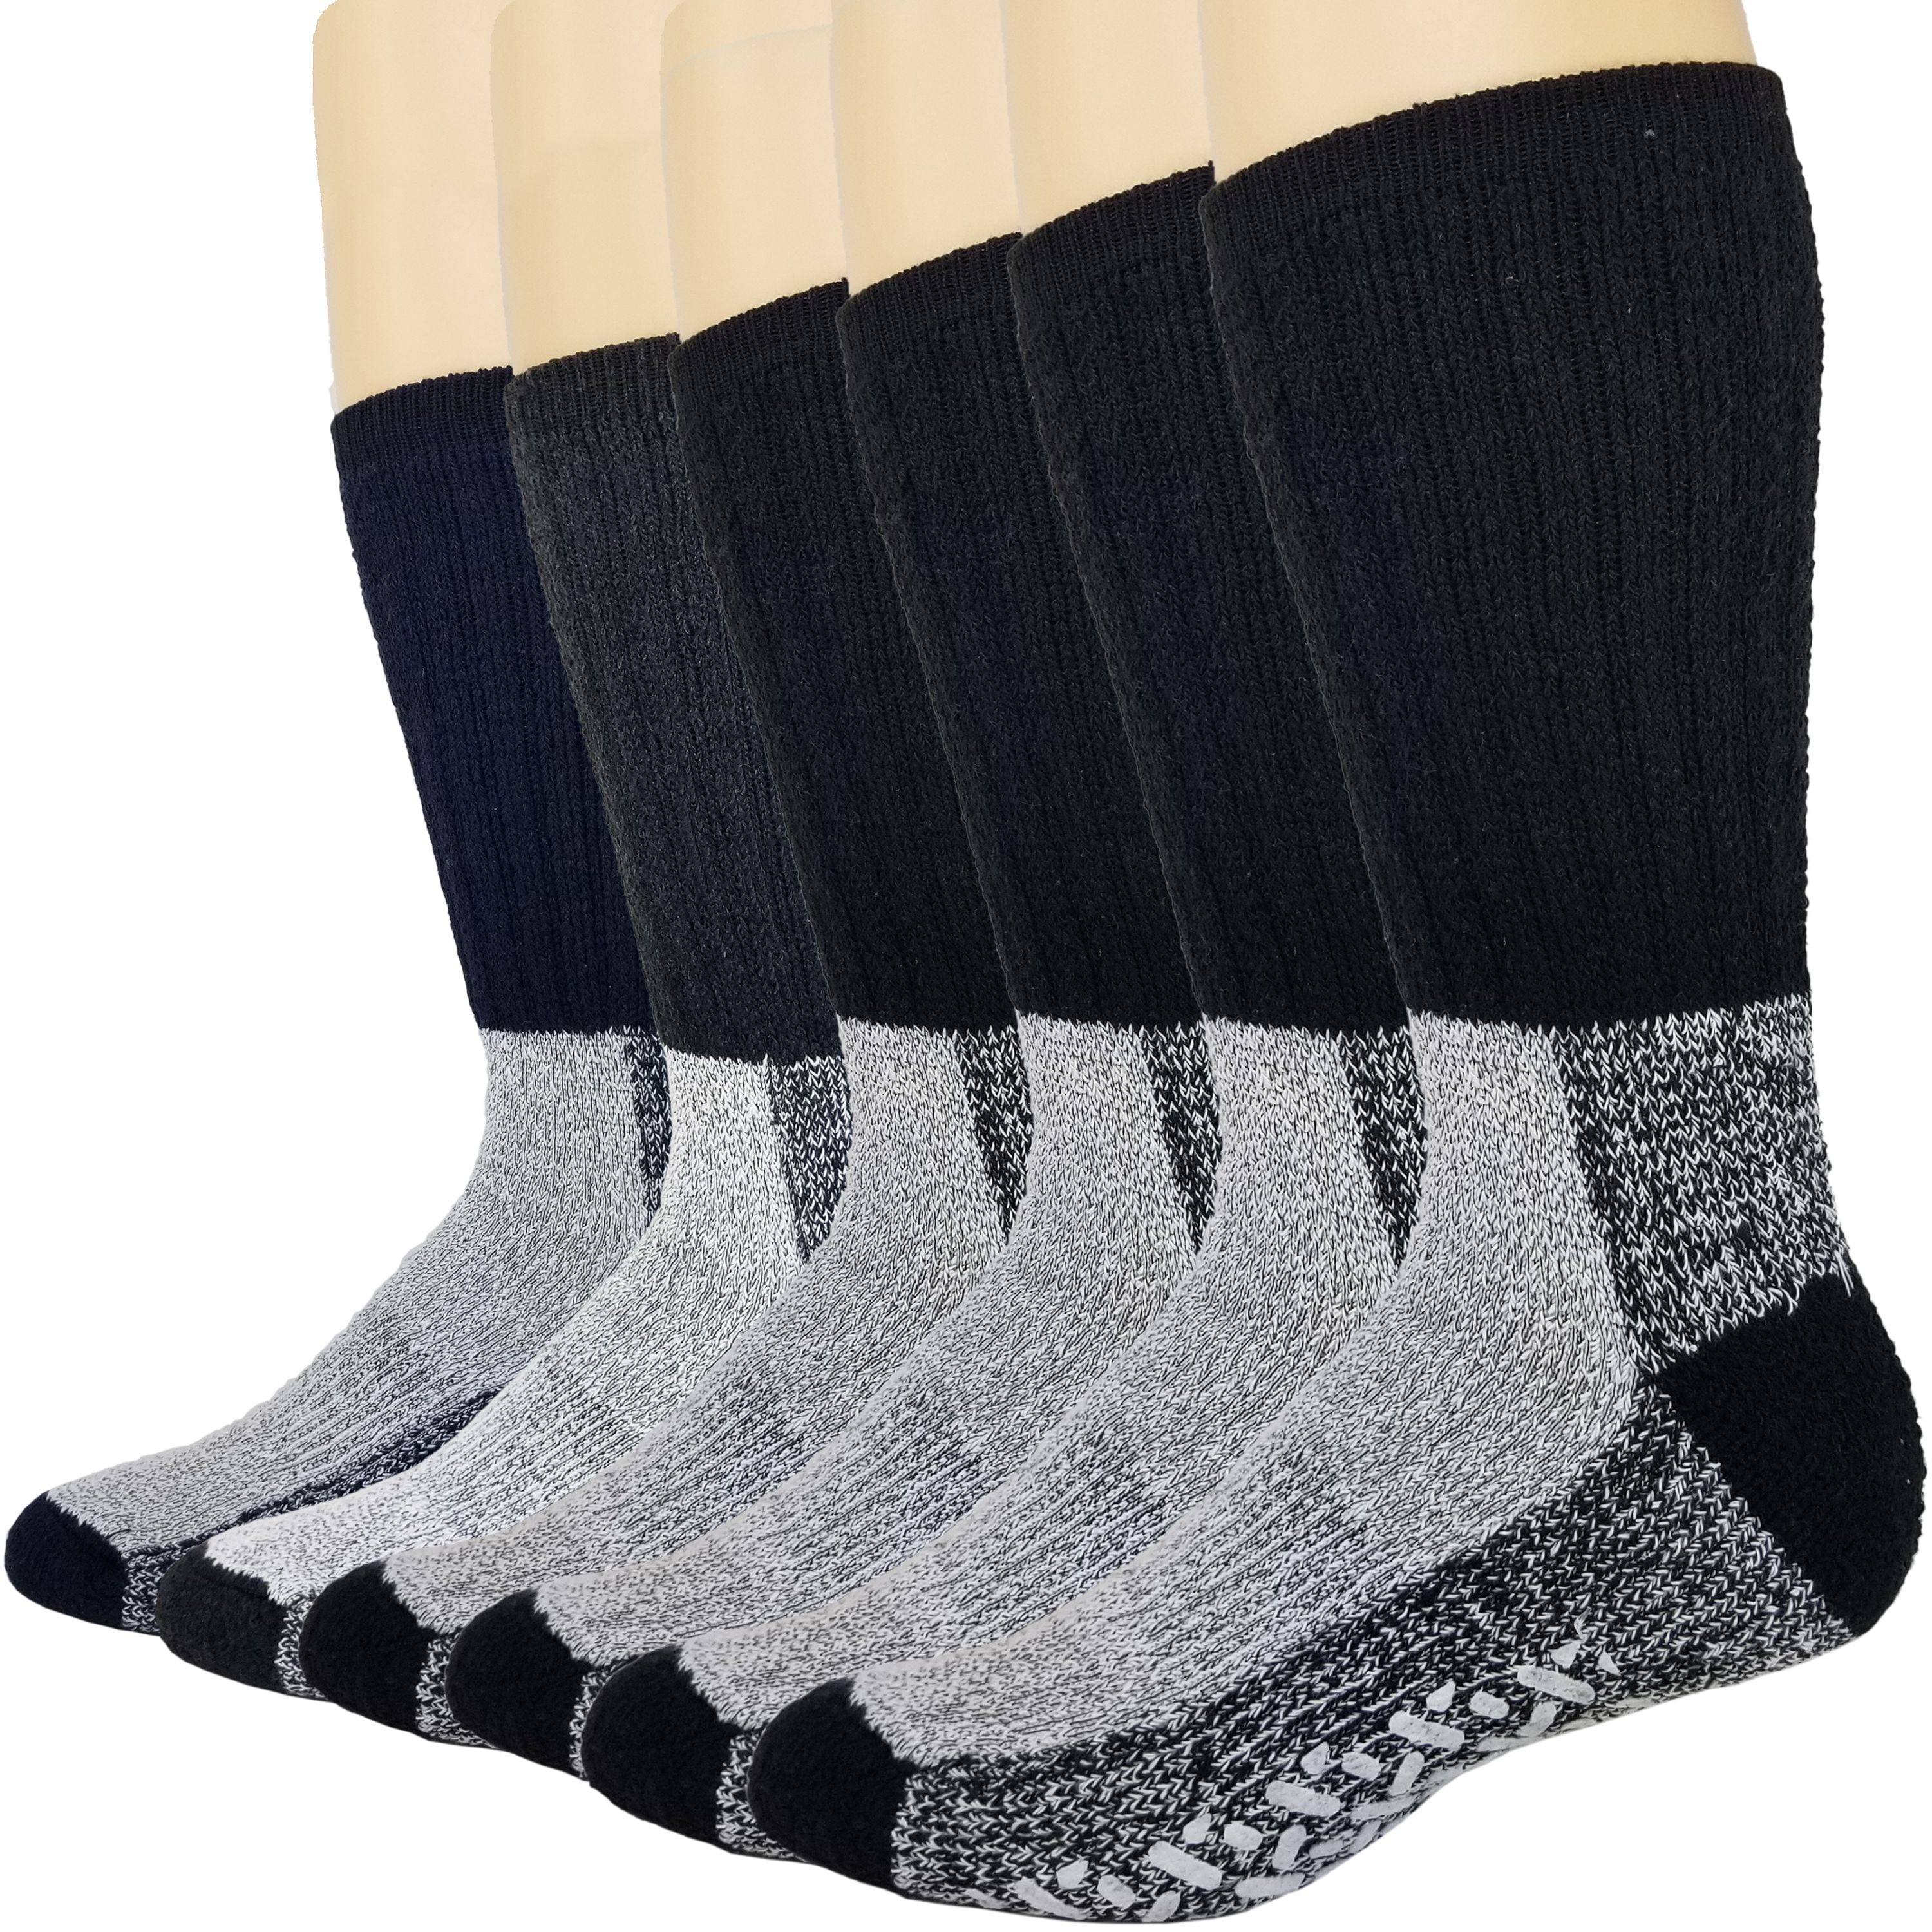 Isenzo skisocken Winter Socks Thermal Socks Warm Winter Ski Socks Mens Ladies 